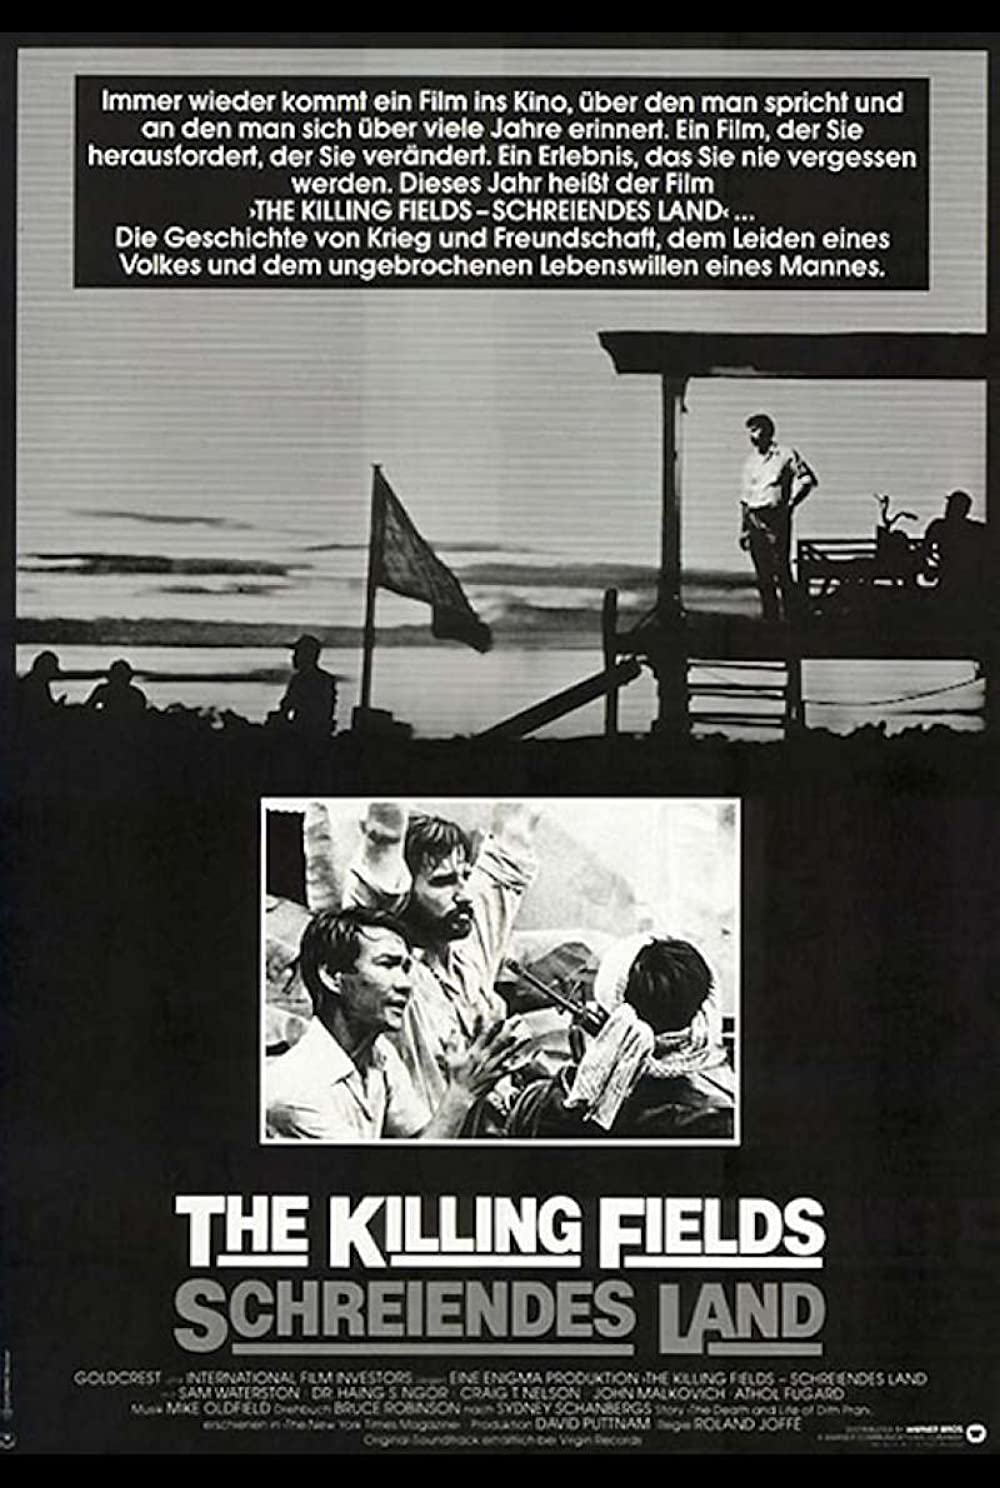 Filmbeschreibung zu The Killing Fields